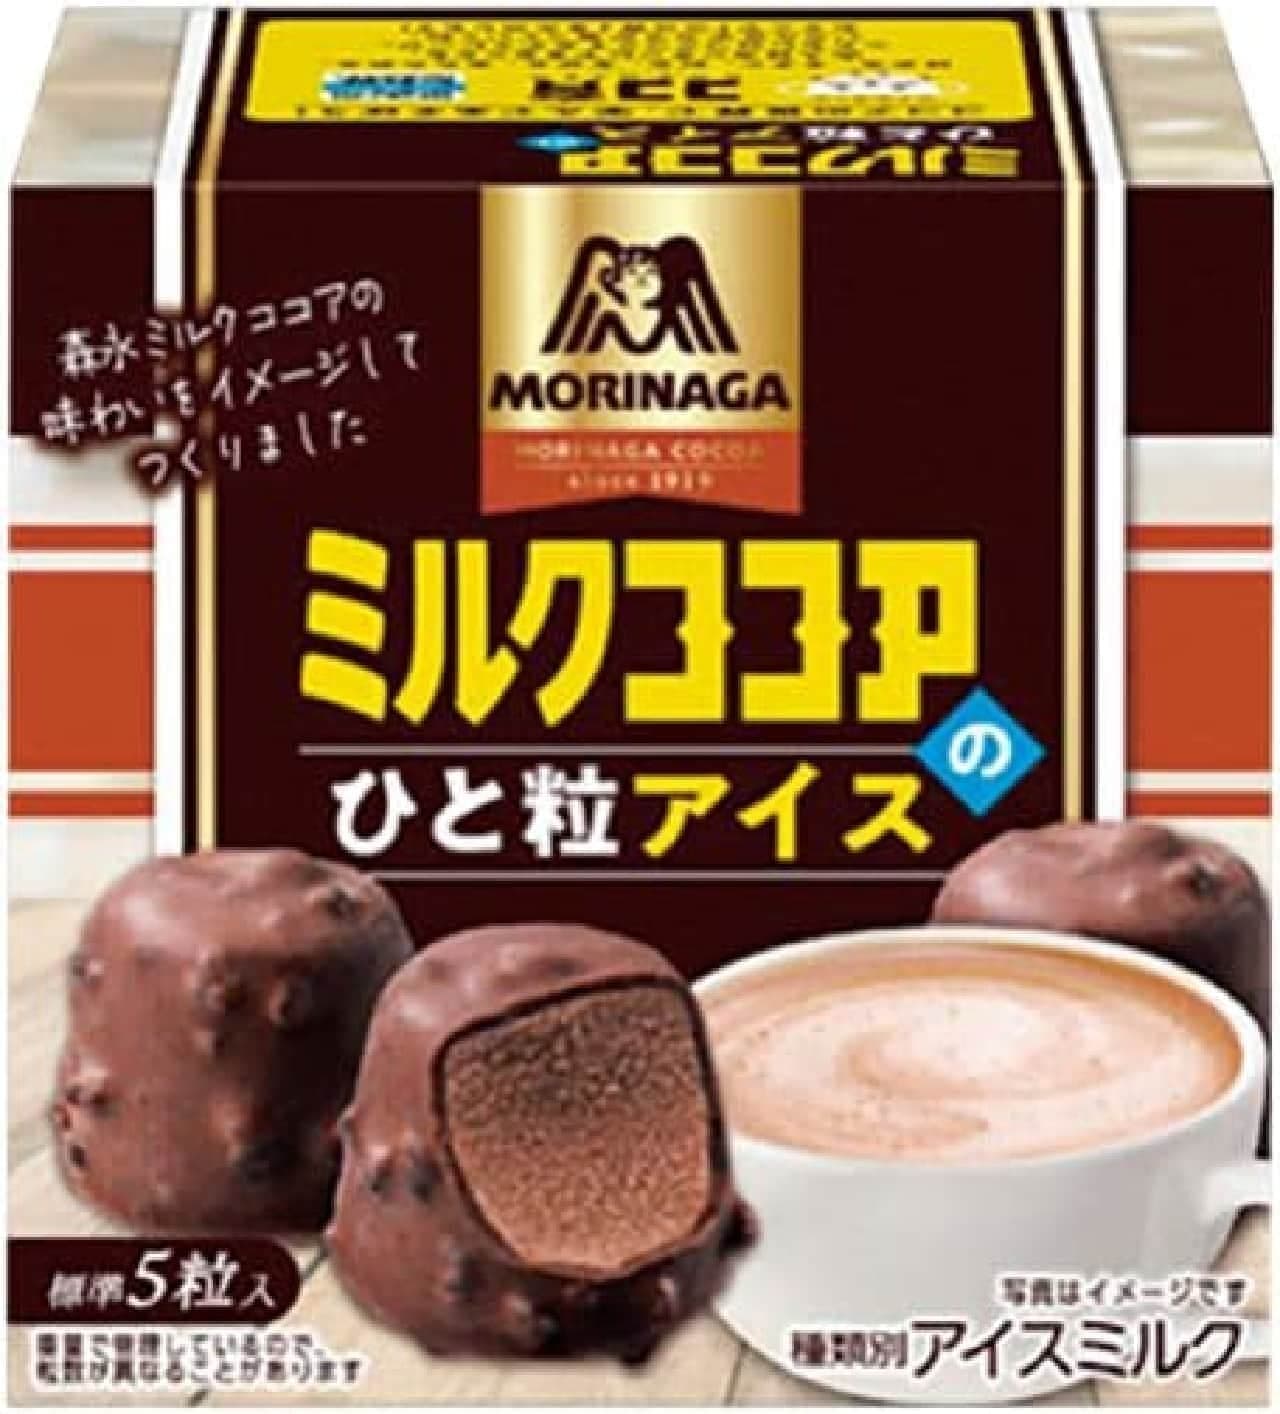 FamilyMart "Morinaga Milk Cocoa Ice Cream